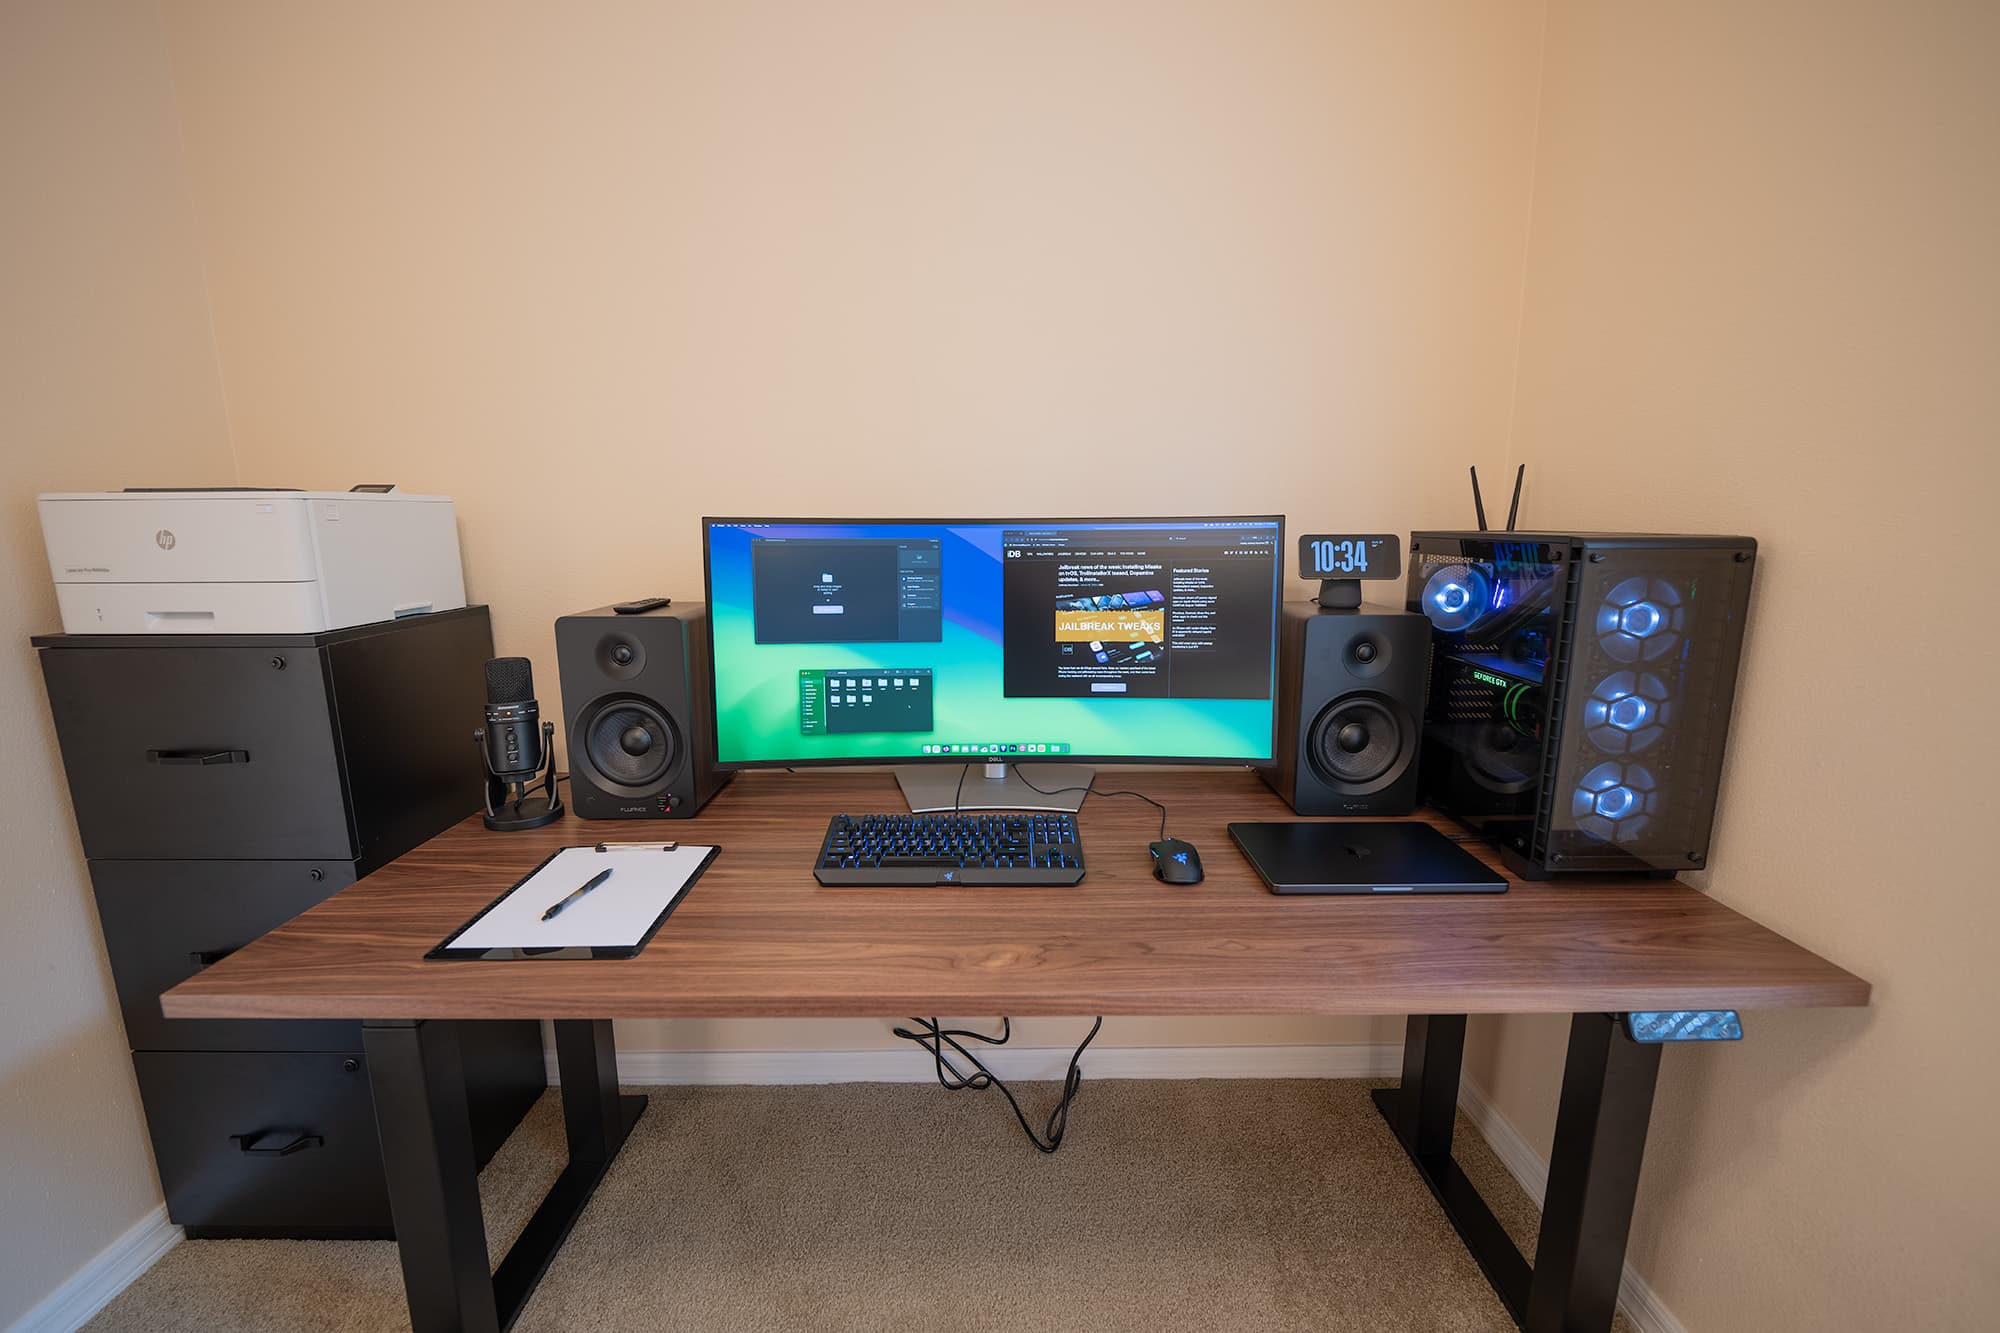 The FlexiSpot E7 Plus Standing Desk is my new favorite workspace